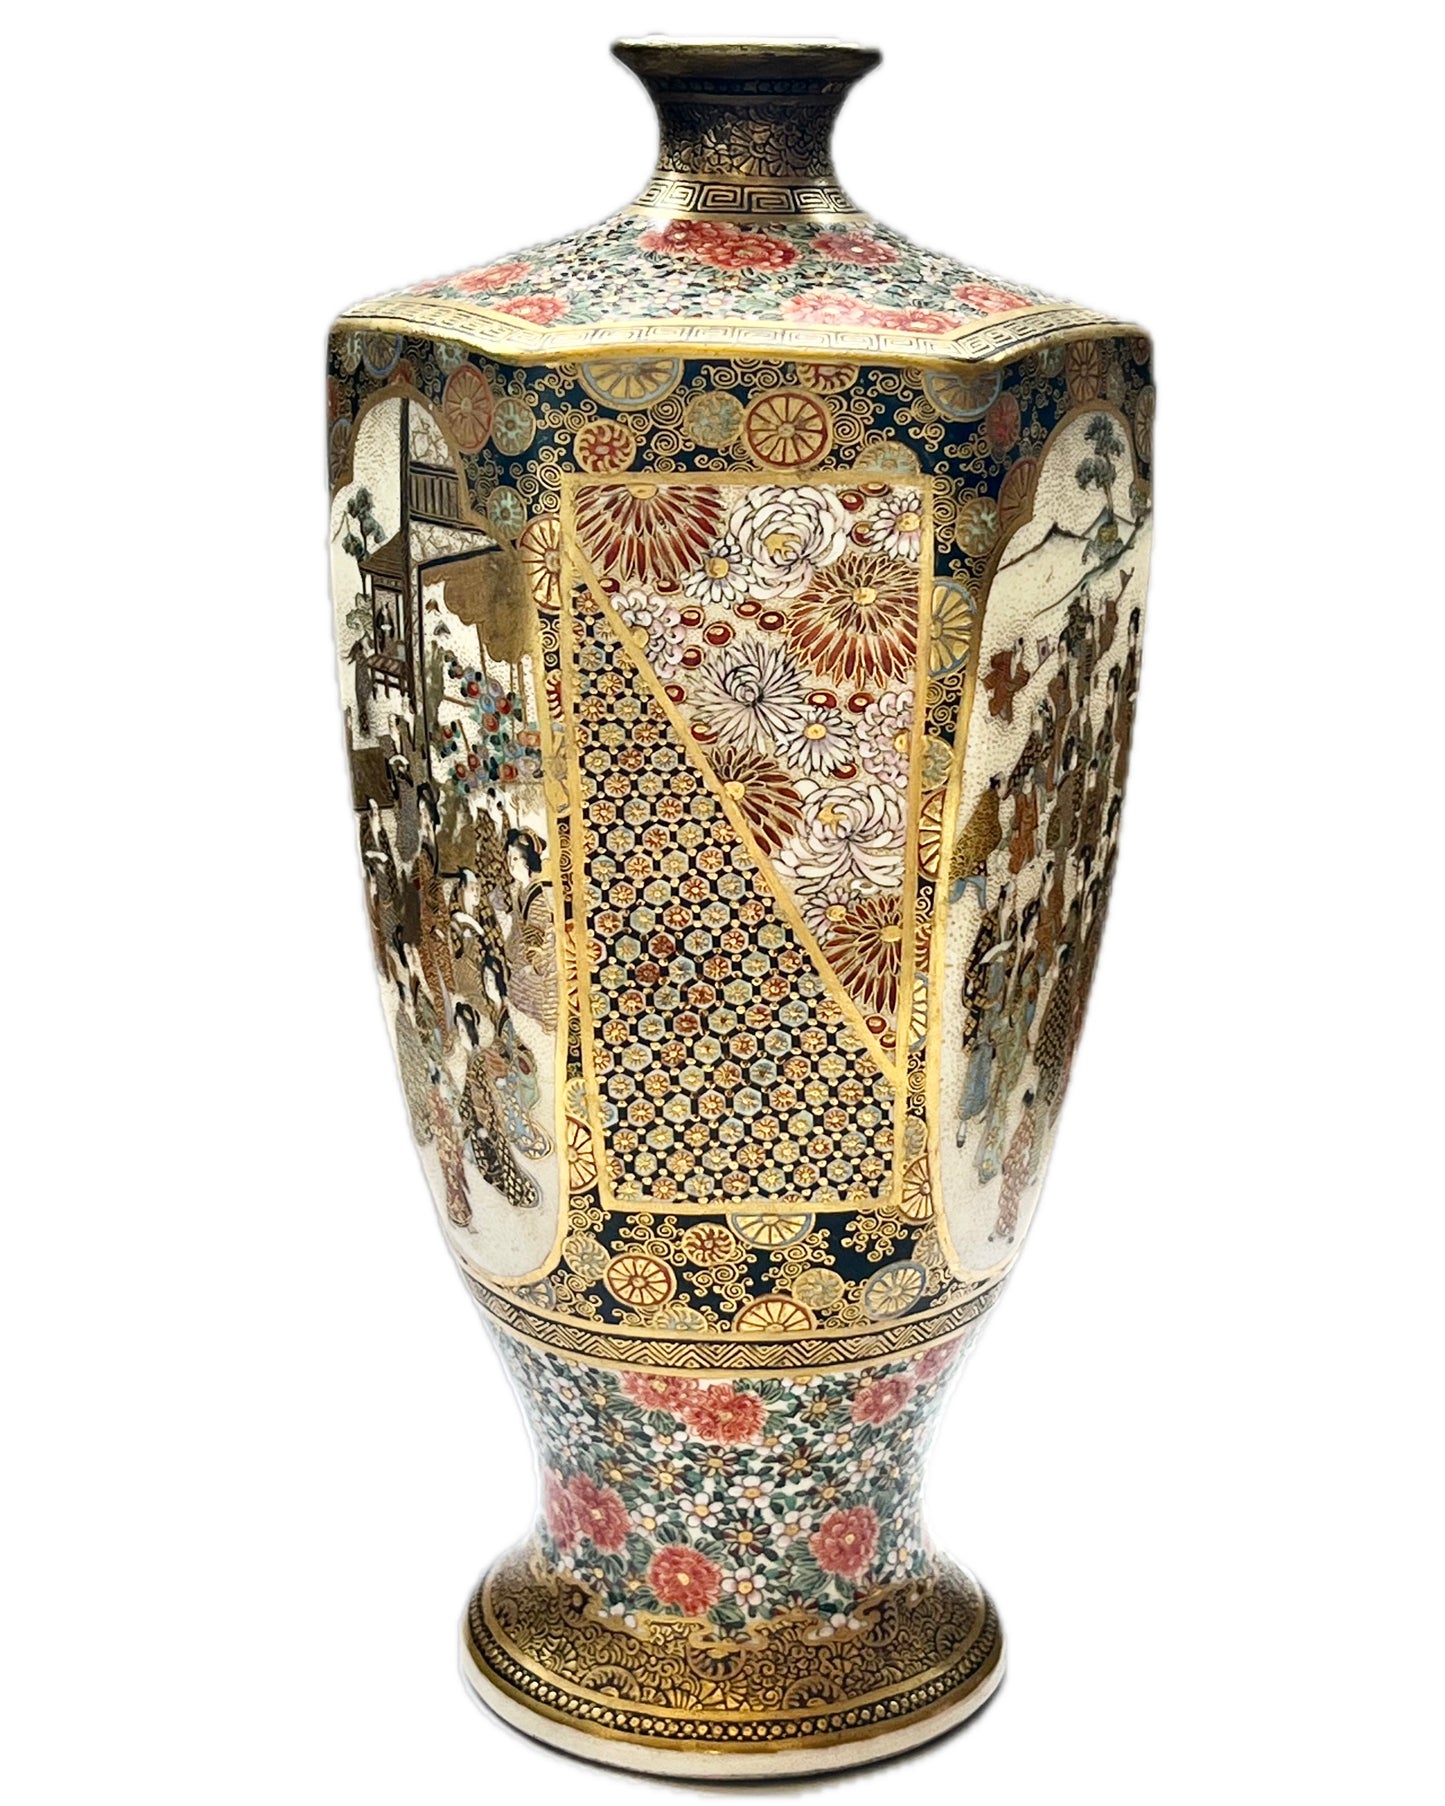 Antique Japanese Meiji period Satsuma hexagonal vase by Kozan circa mid to late 19th century (1860s to 1890s)